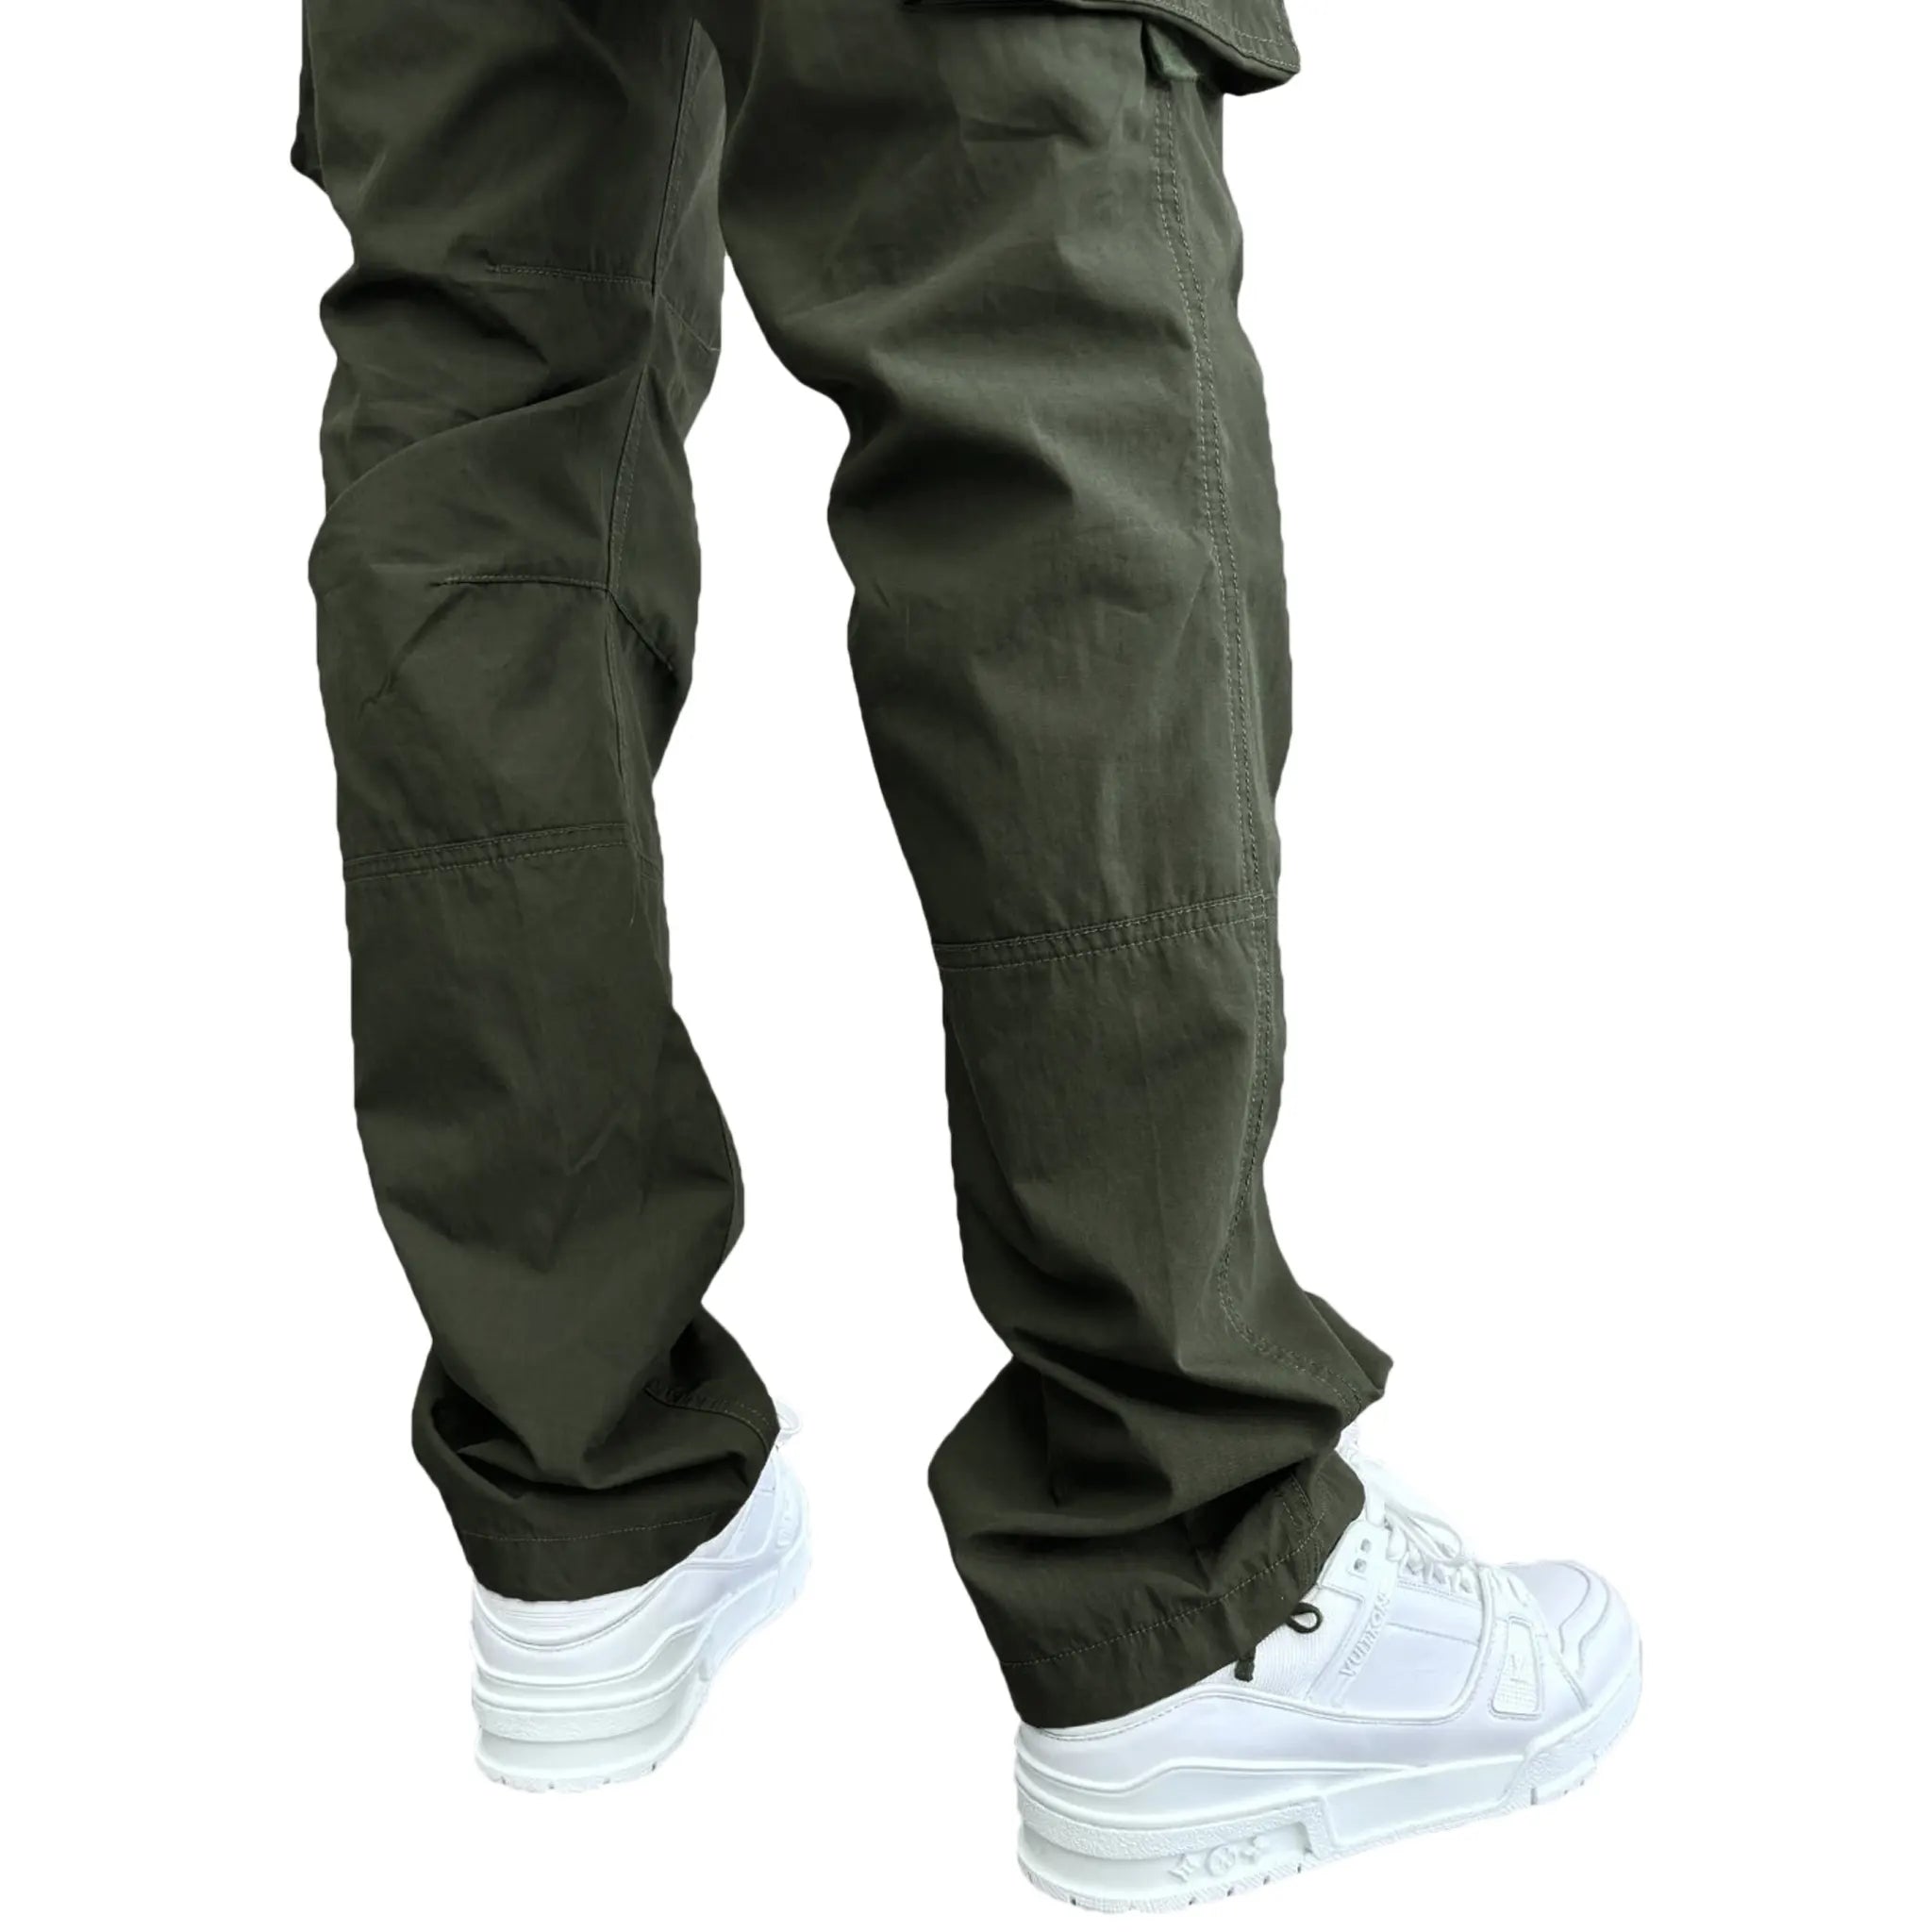 Detail view of SIARR Military Dark Green Cargo Pants